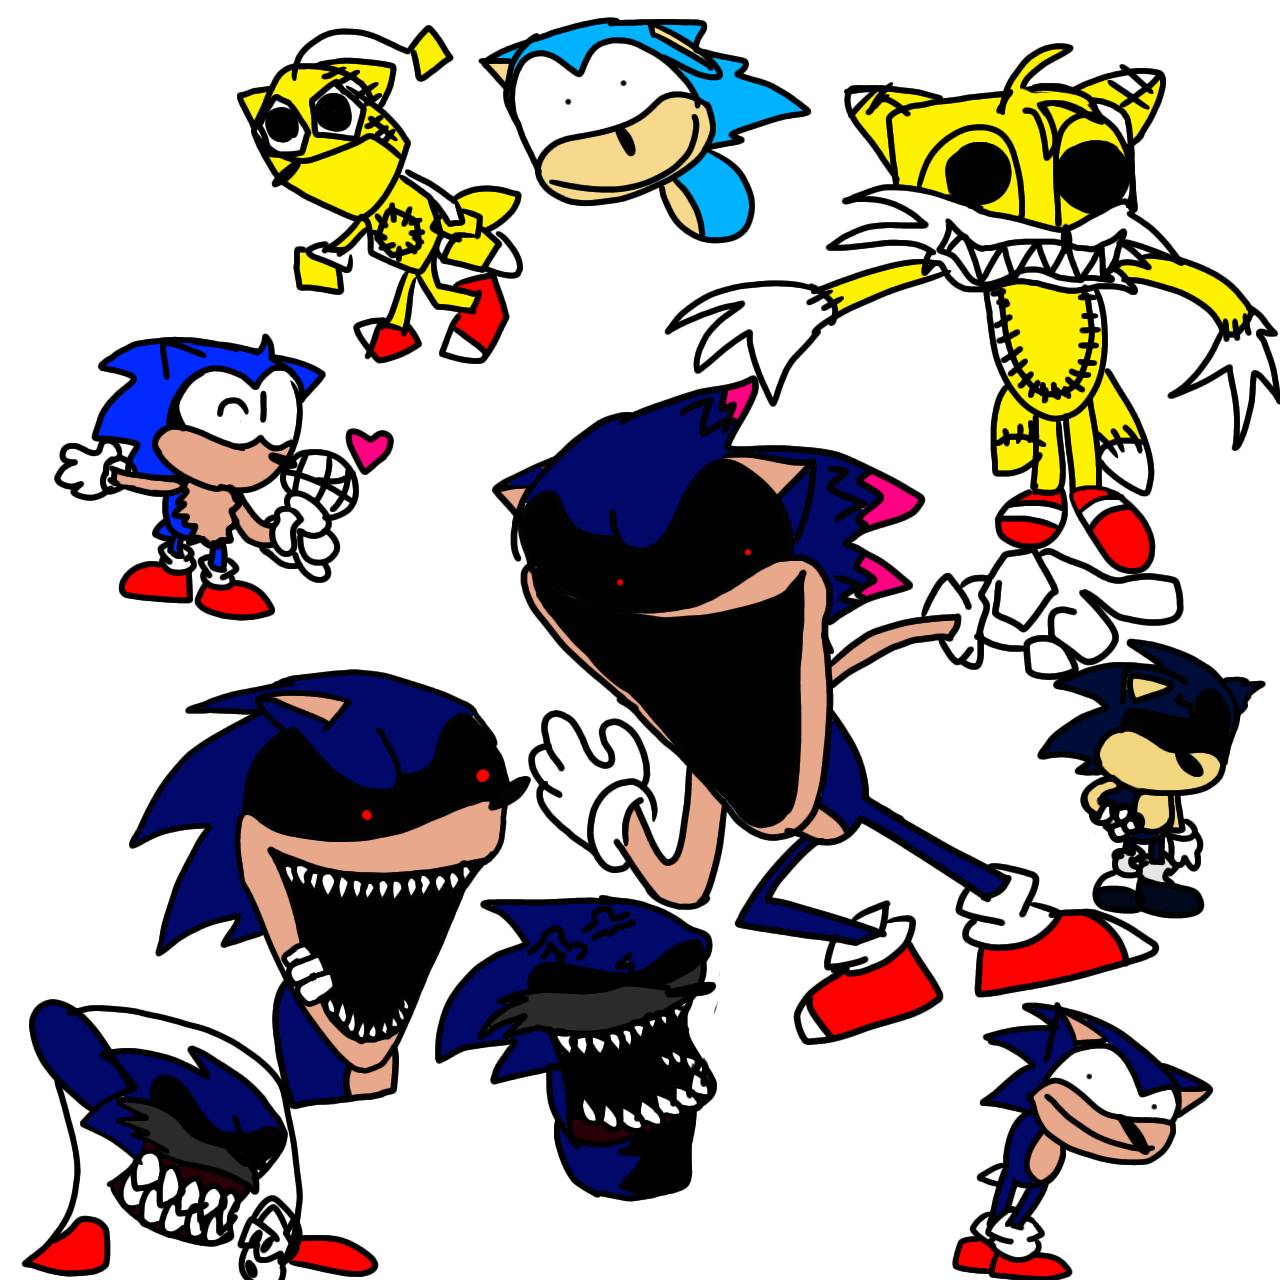 Friday Night Funkin': VS. Sonic.EXE Restored - Digitalized